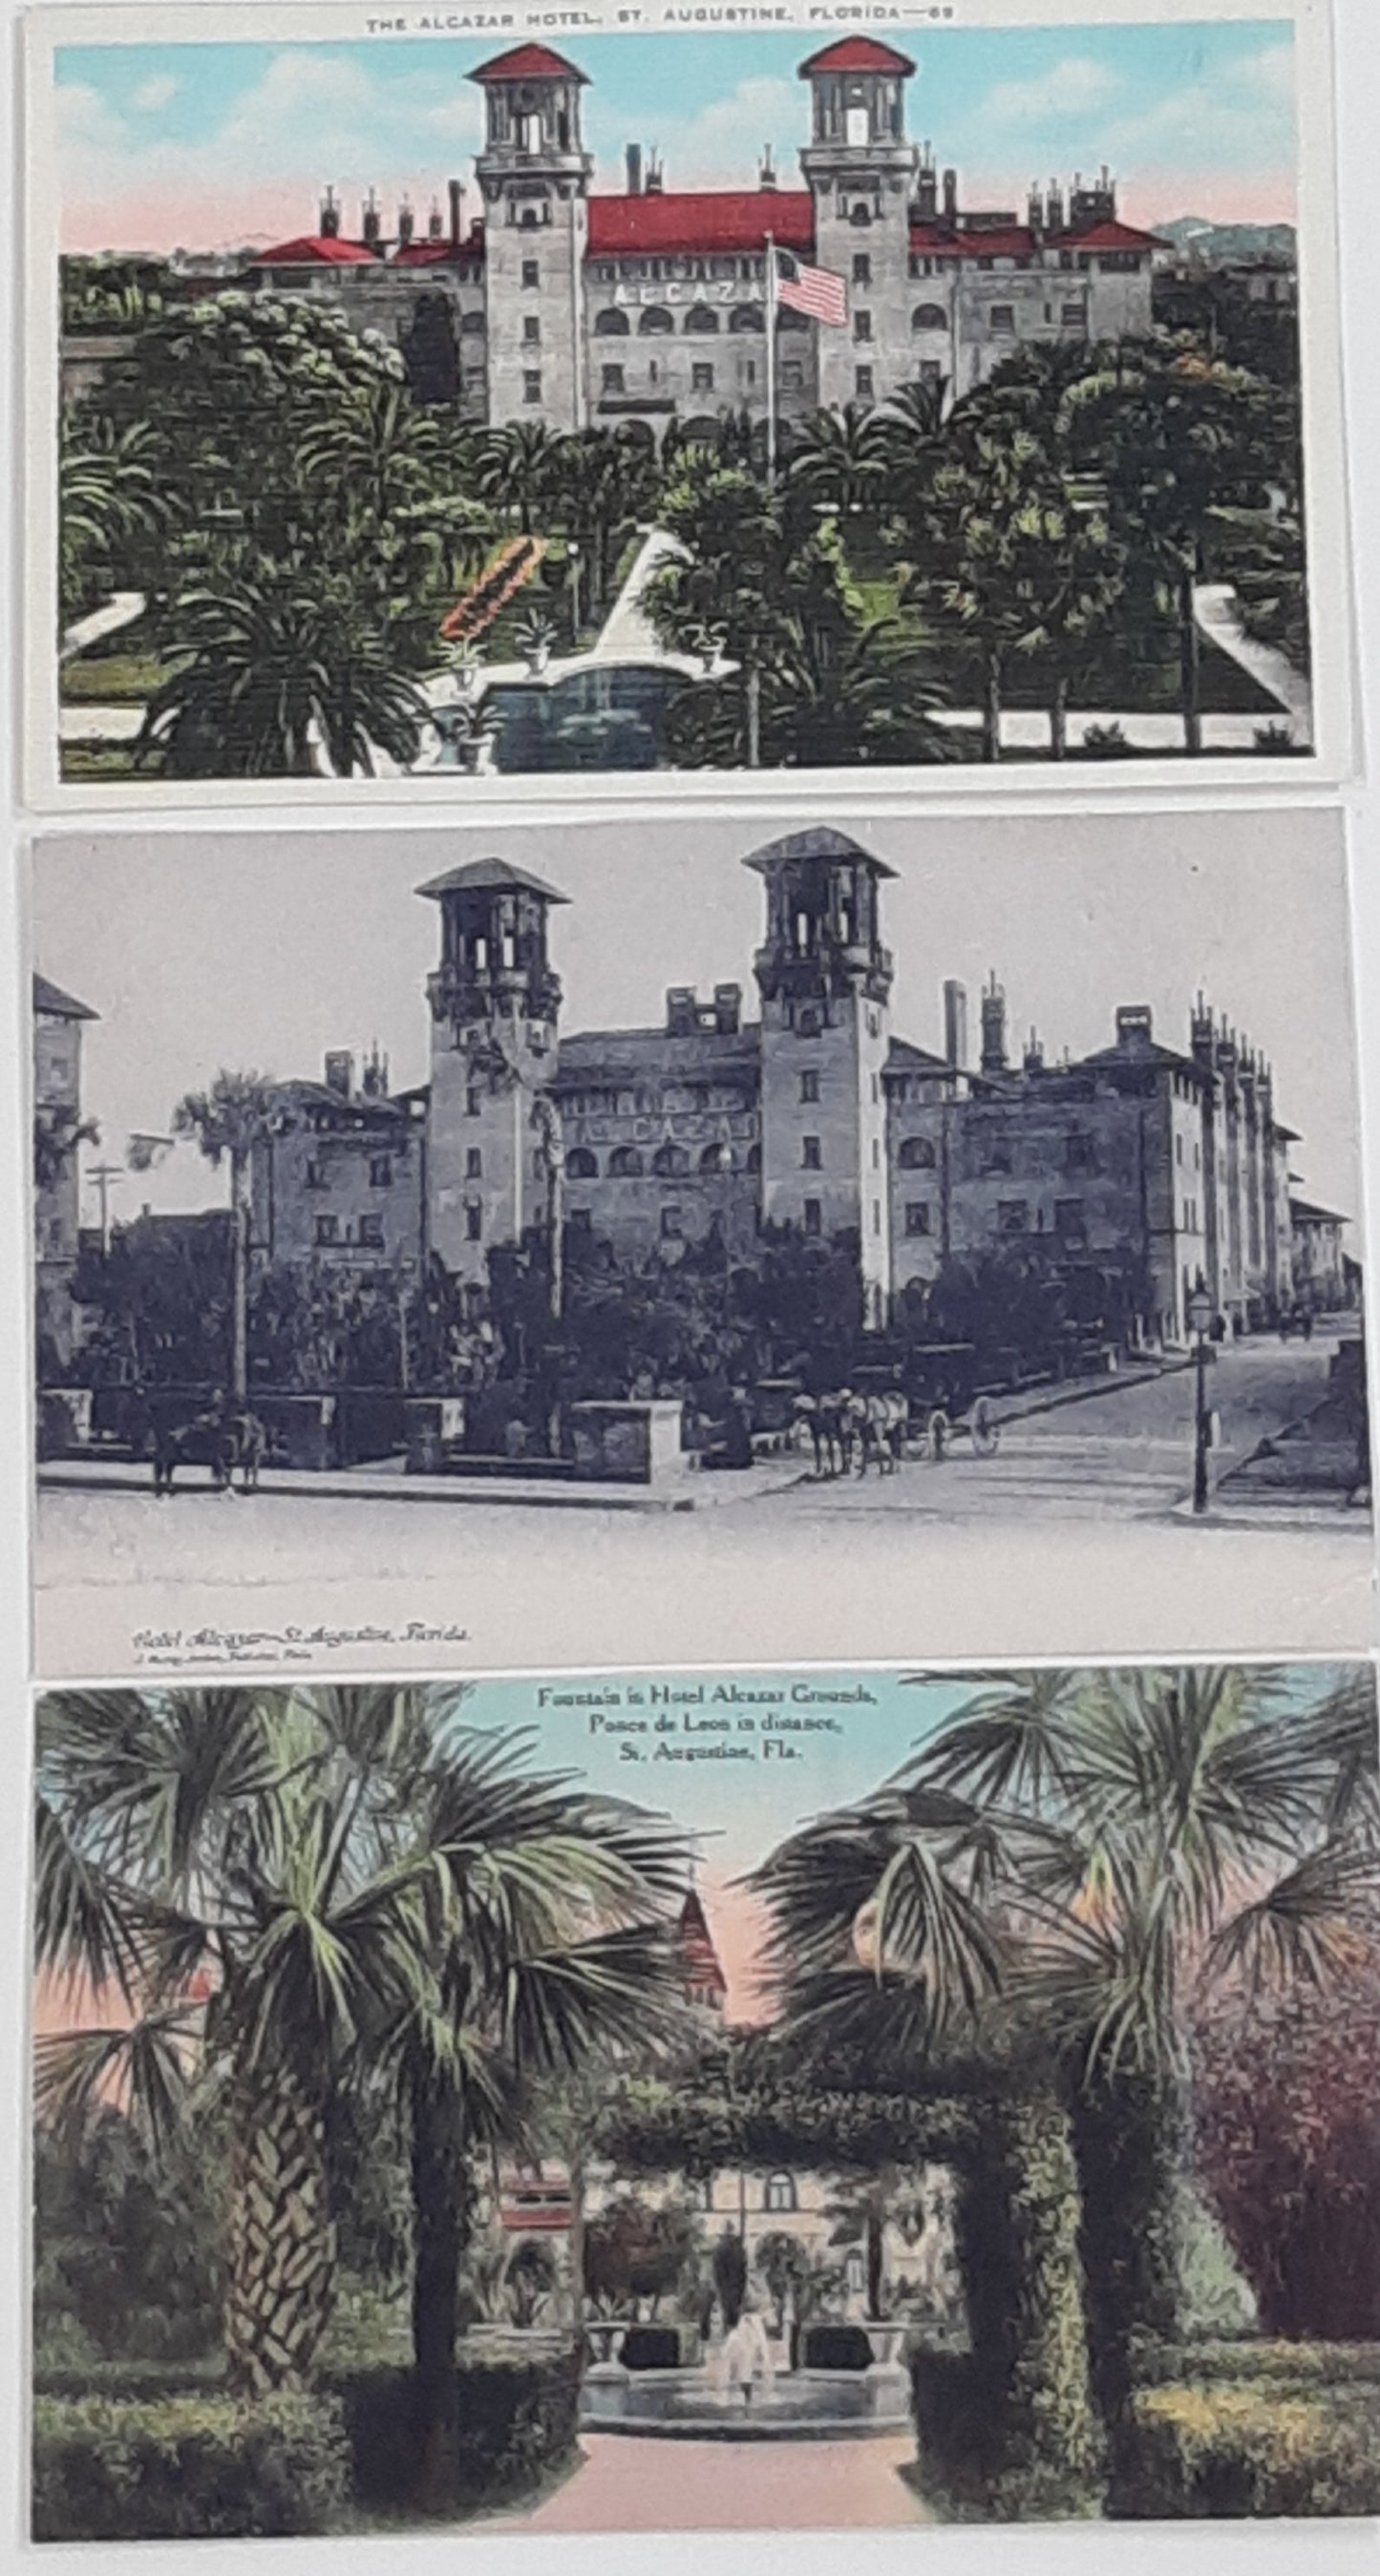 Boardwalk Empire: The Alcazar hotel Post Cards x3